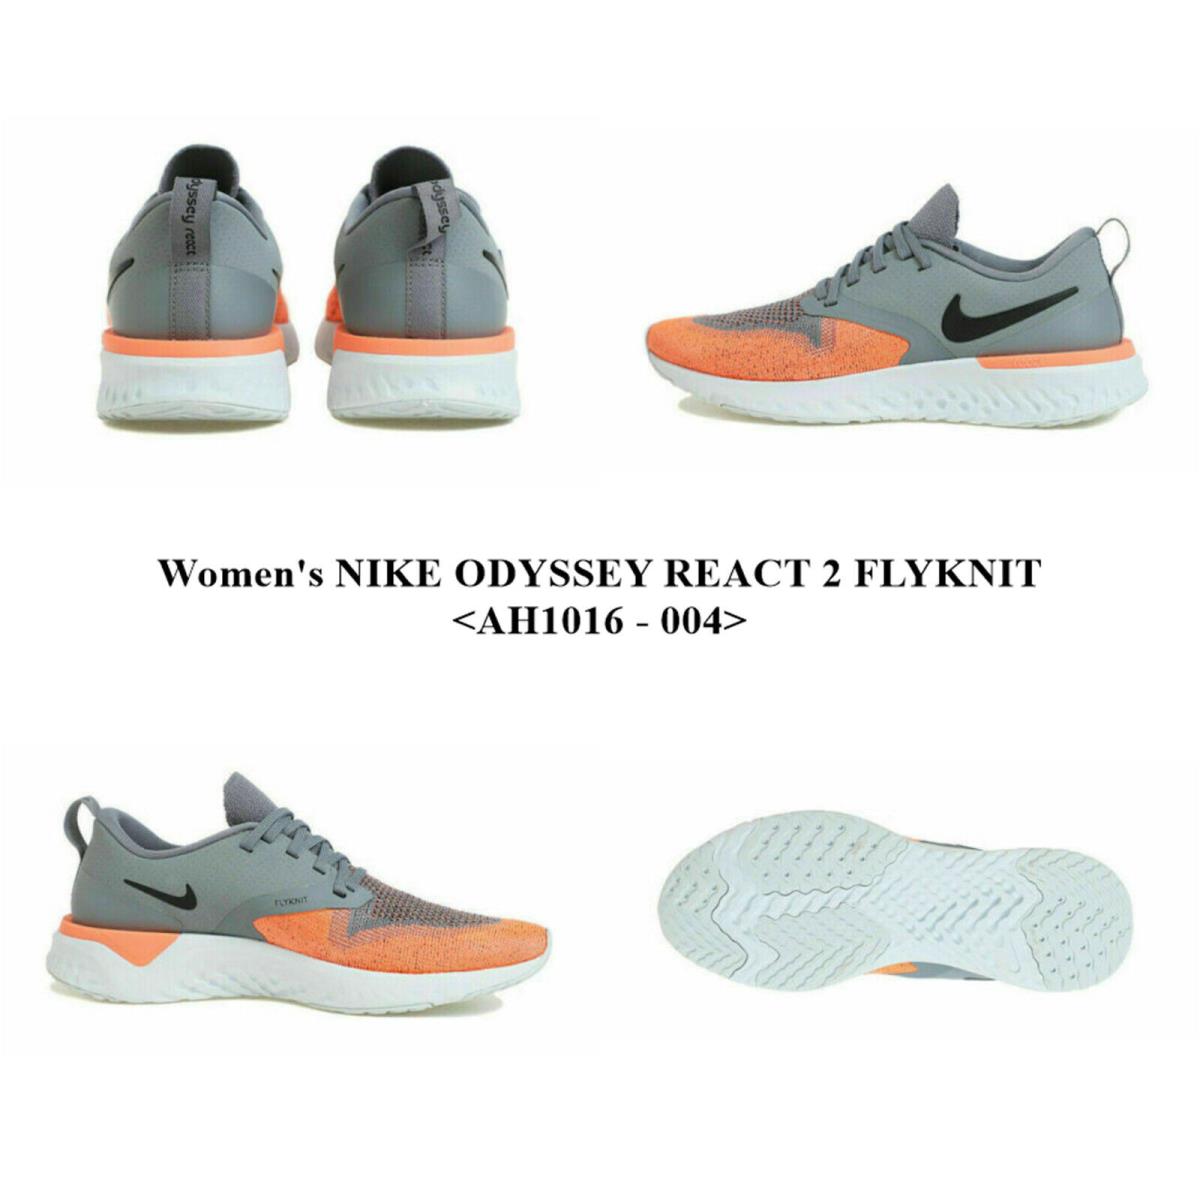 Women`s Nike Odyssey React 2 Flyknit AH1016 - 004 Running/casual Shoes.nwbox - COOL GREY / BLACK-BRIGHT MANGO